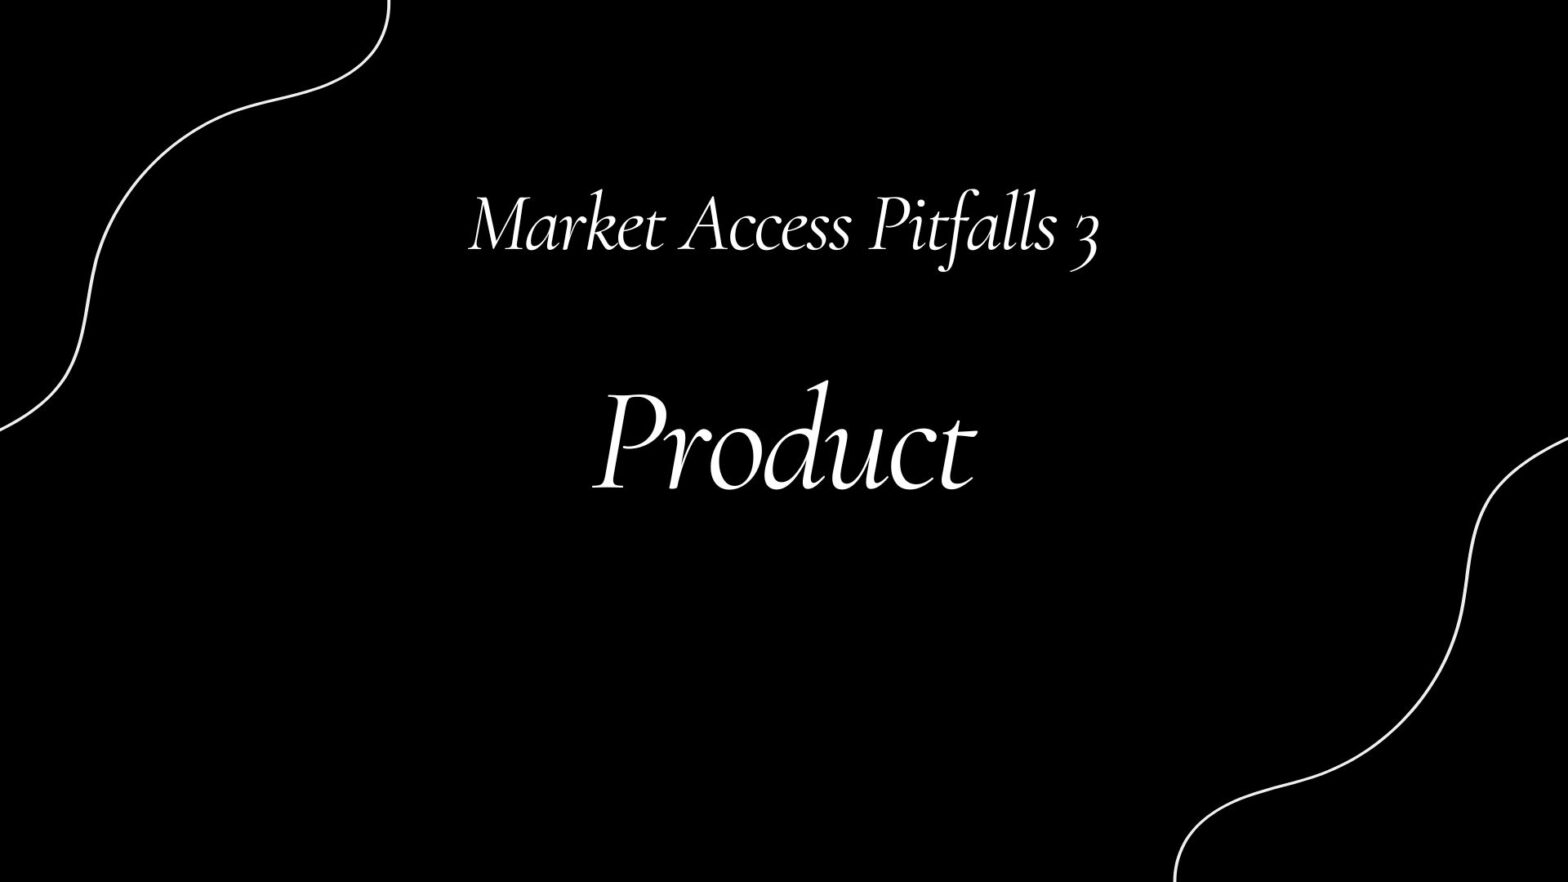 Market Access Pitfalls 3: Product